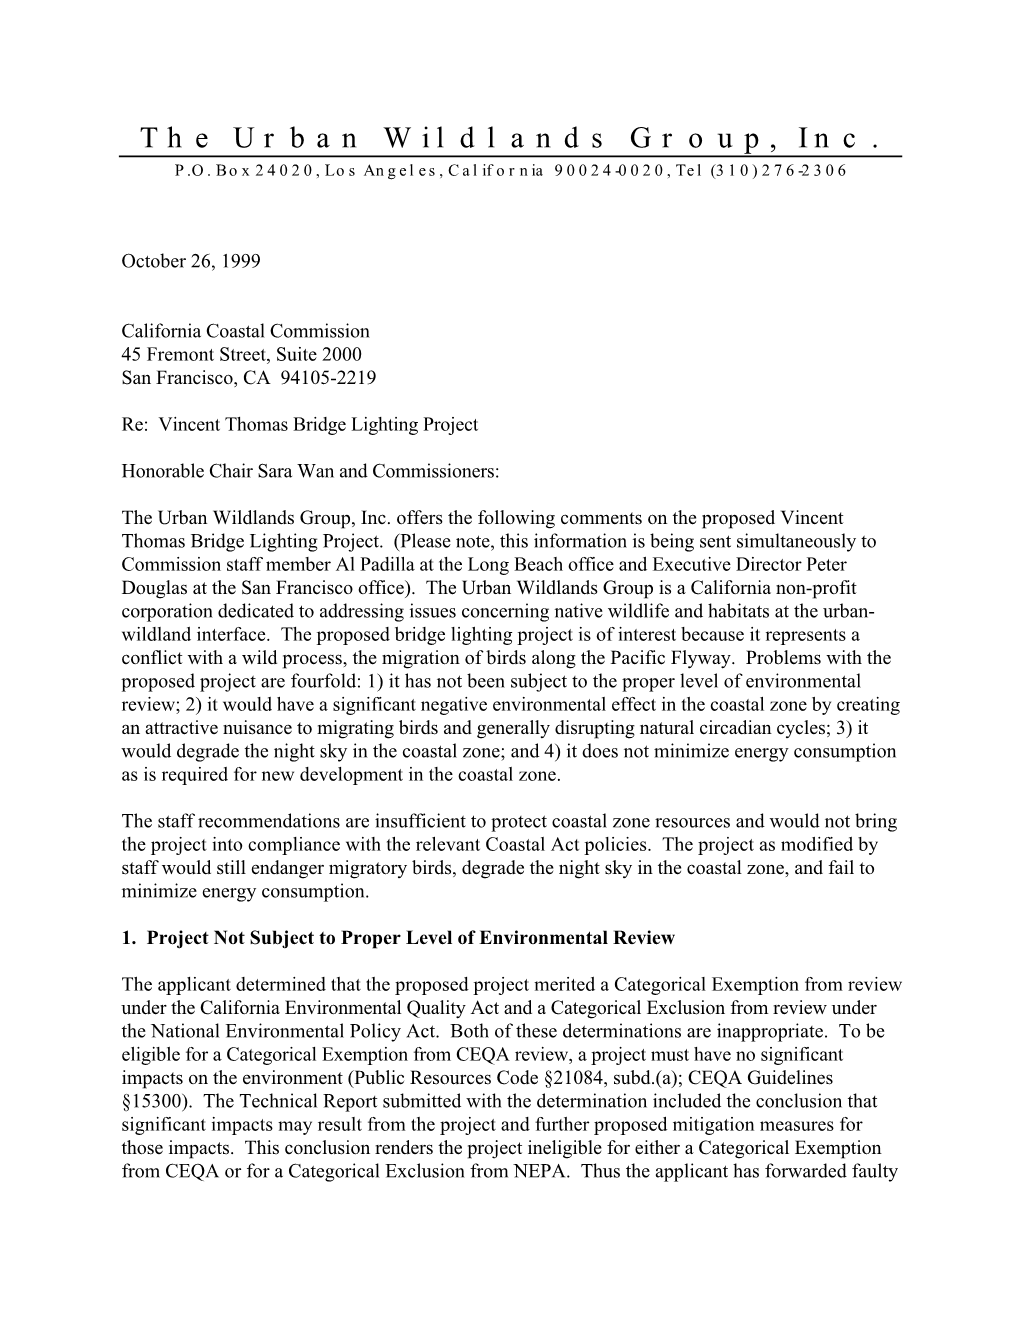 UWG Letter to California Coastal Commission on Bridge Lighting Proposal